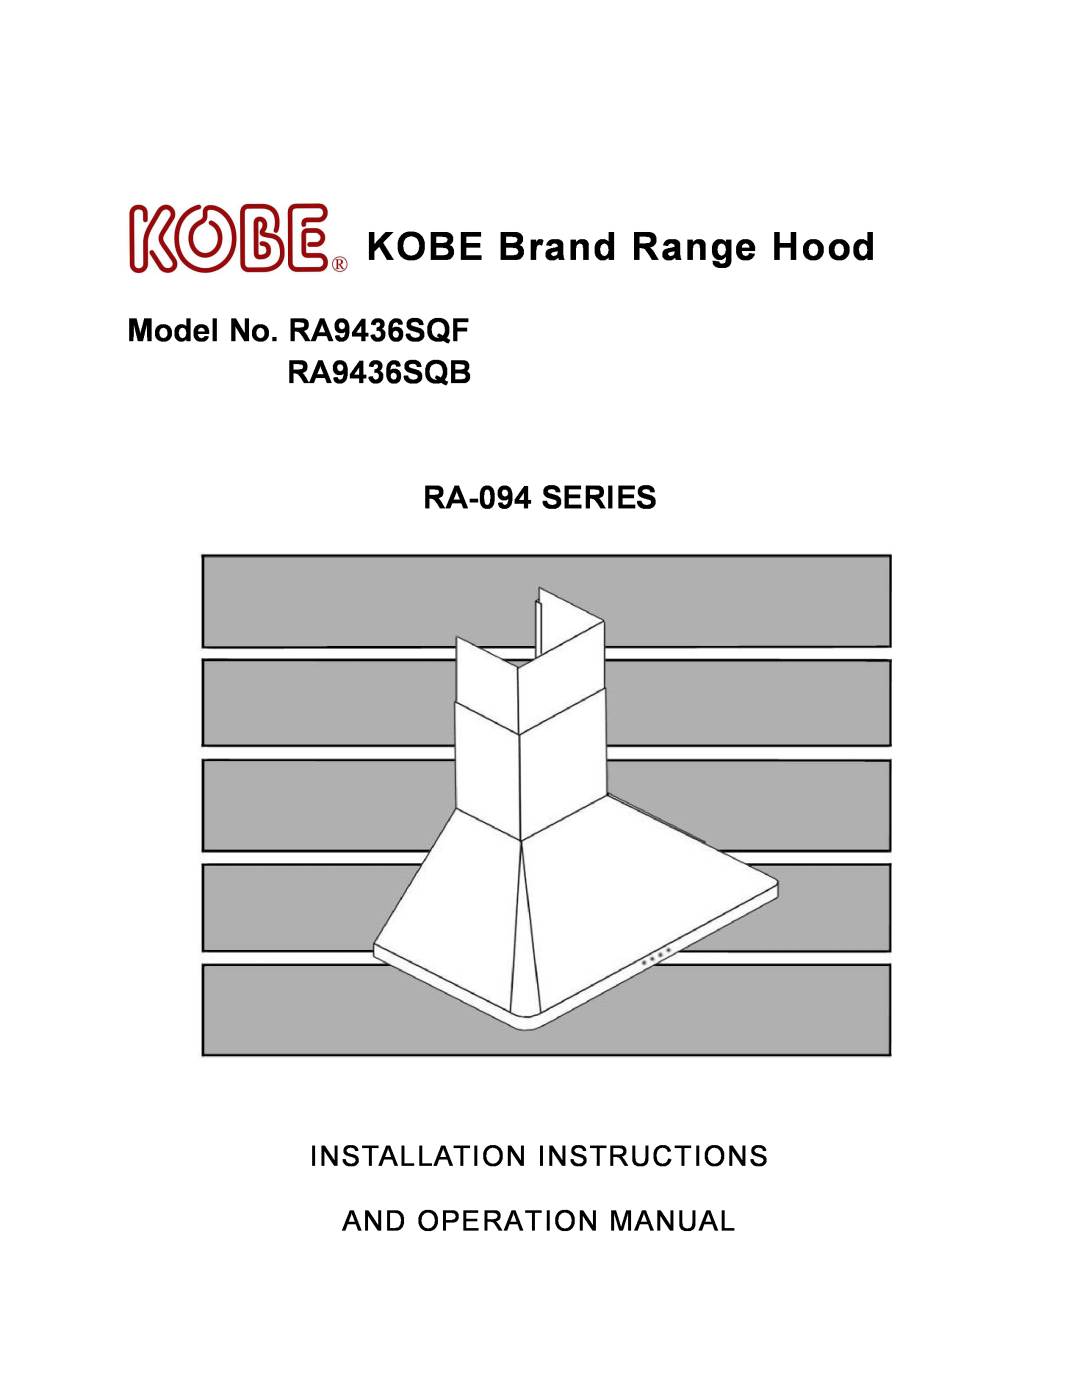 Kobe Range Hoods RA943SQB installation instructions KOBE Brand Range Hood, Model No. RA9436SQF RA9436SQB RA-094SERIES 